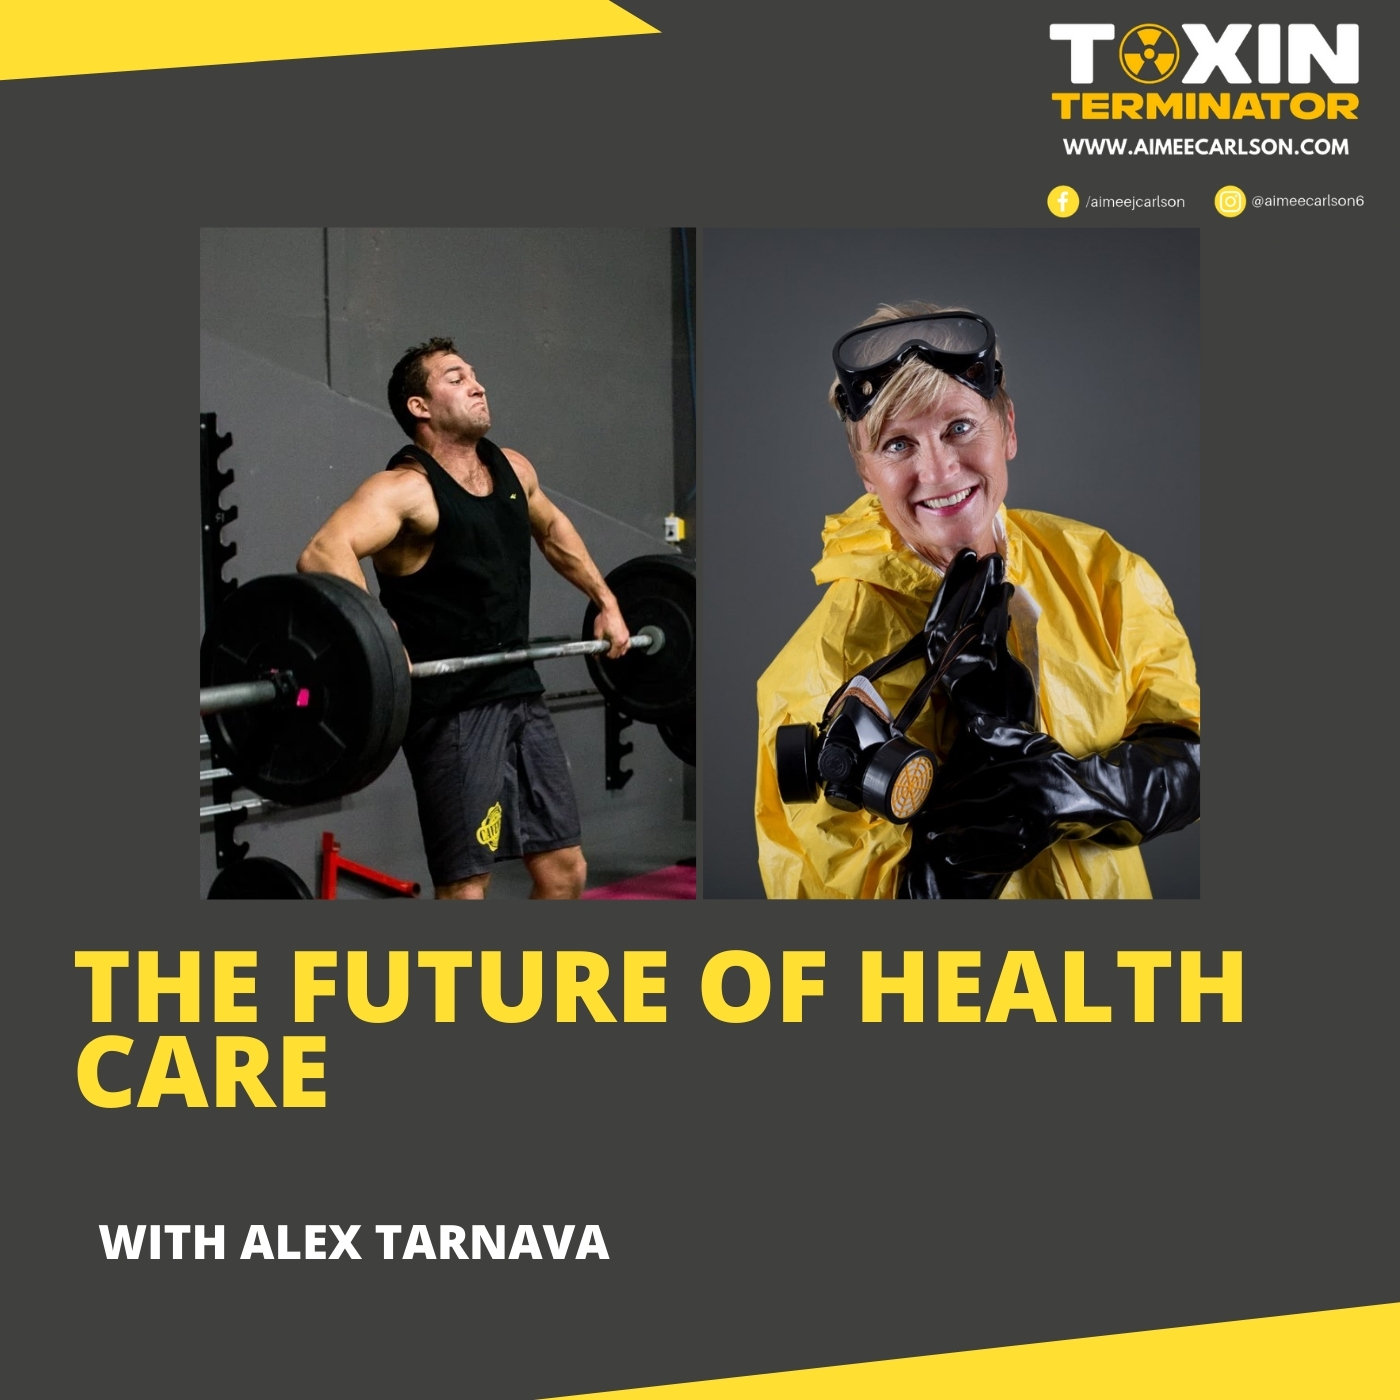 The Future of Health Care with Alex Tarnava